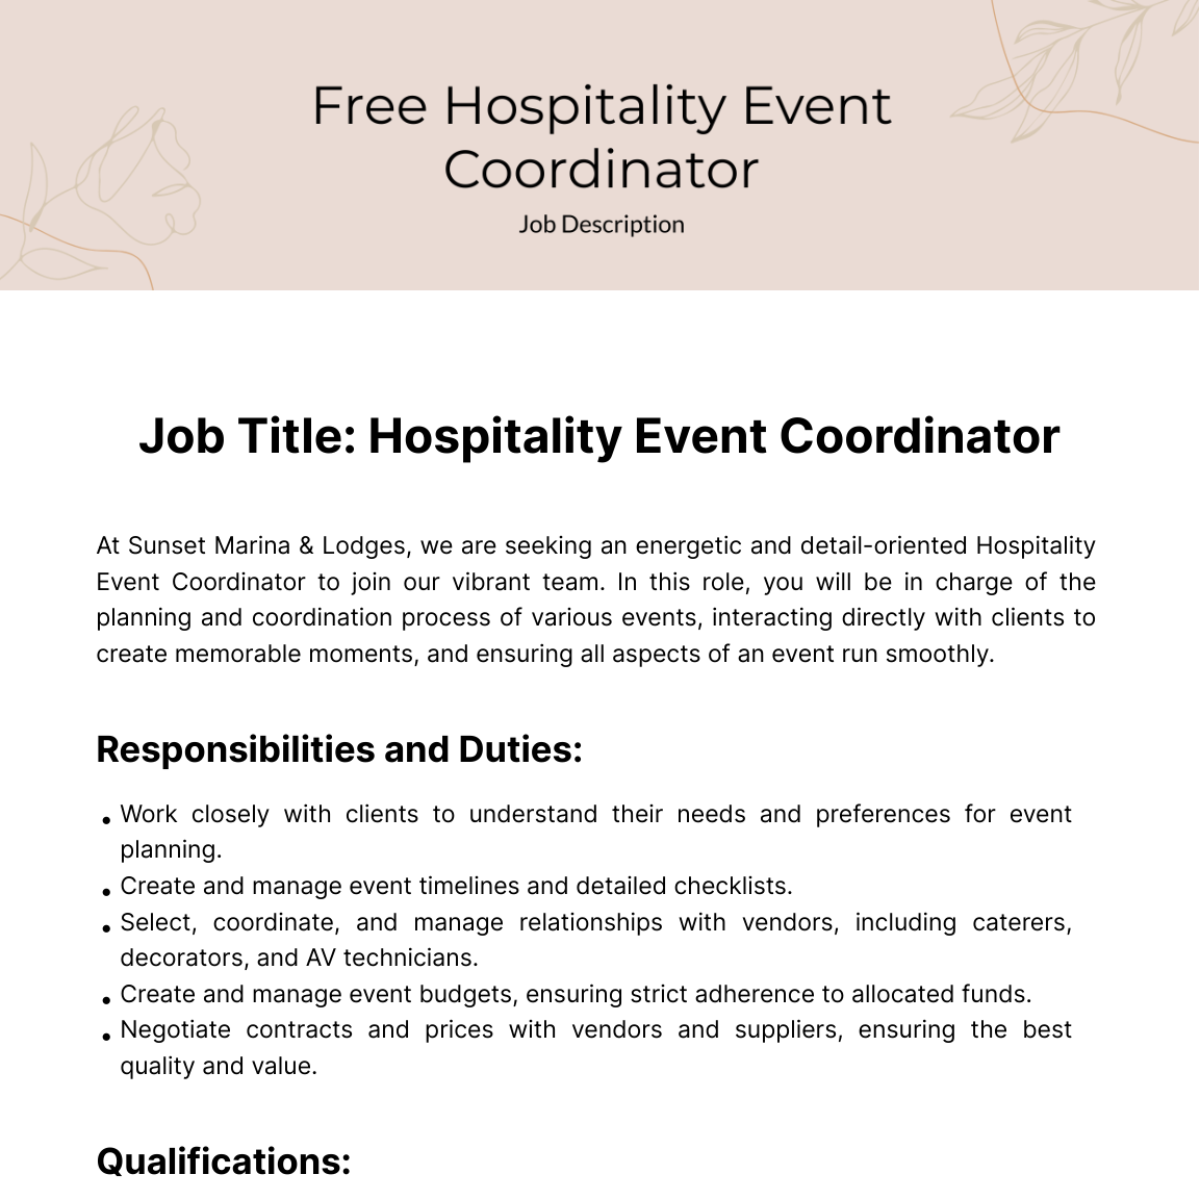 Free Hospitality Event Coordinator Job Description Template